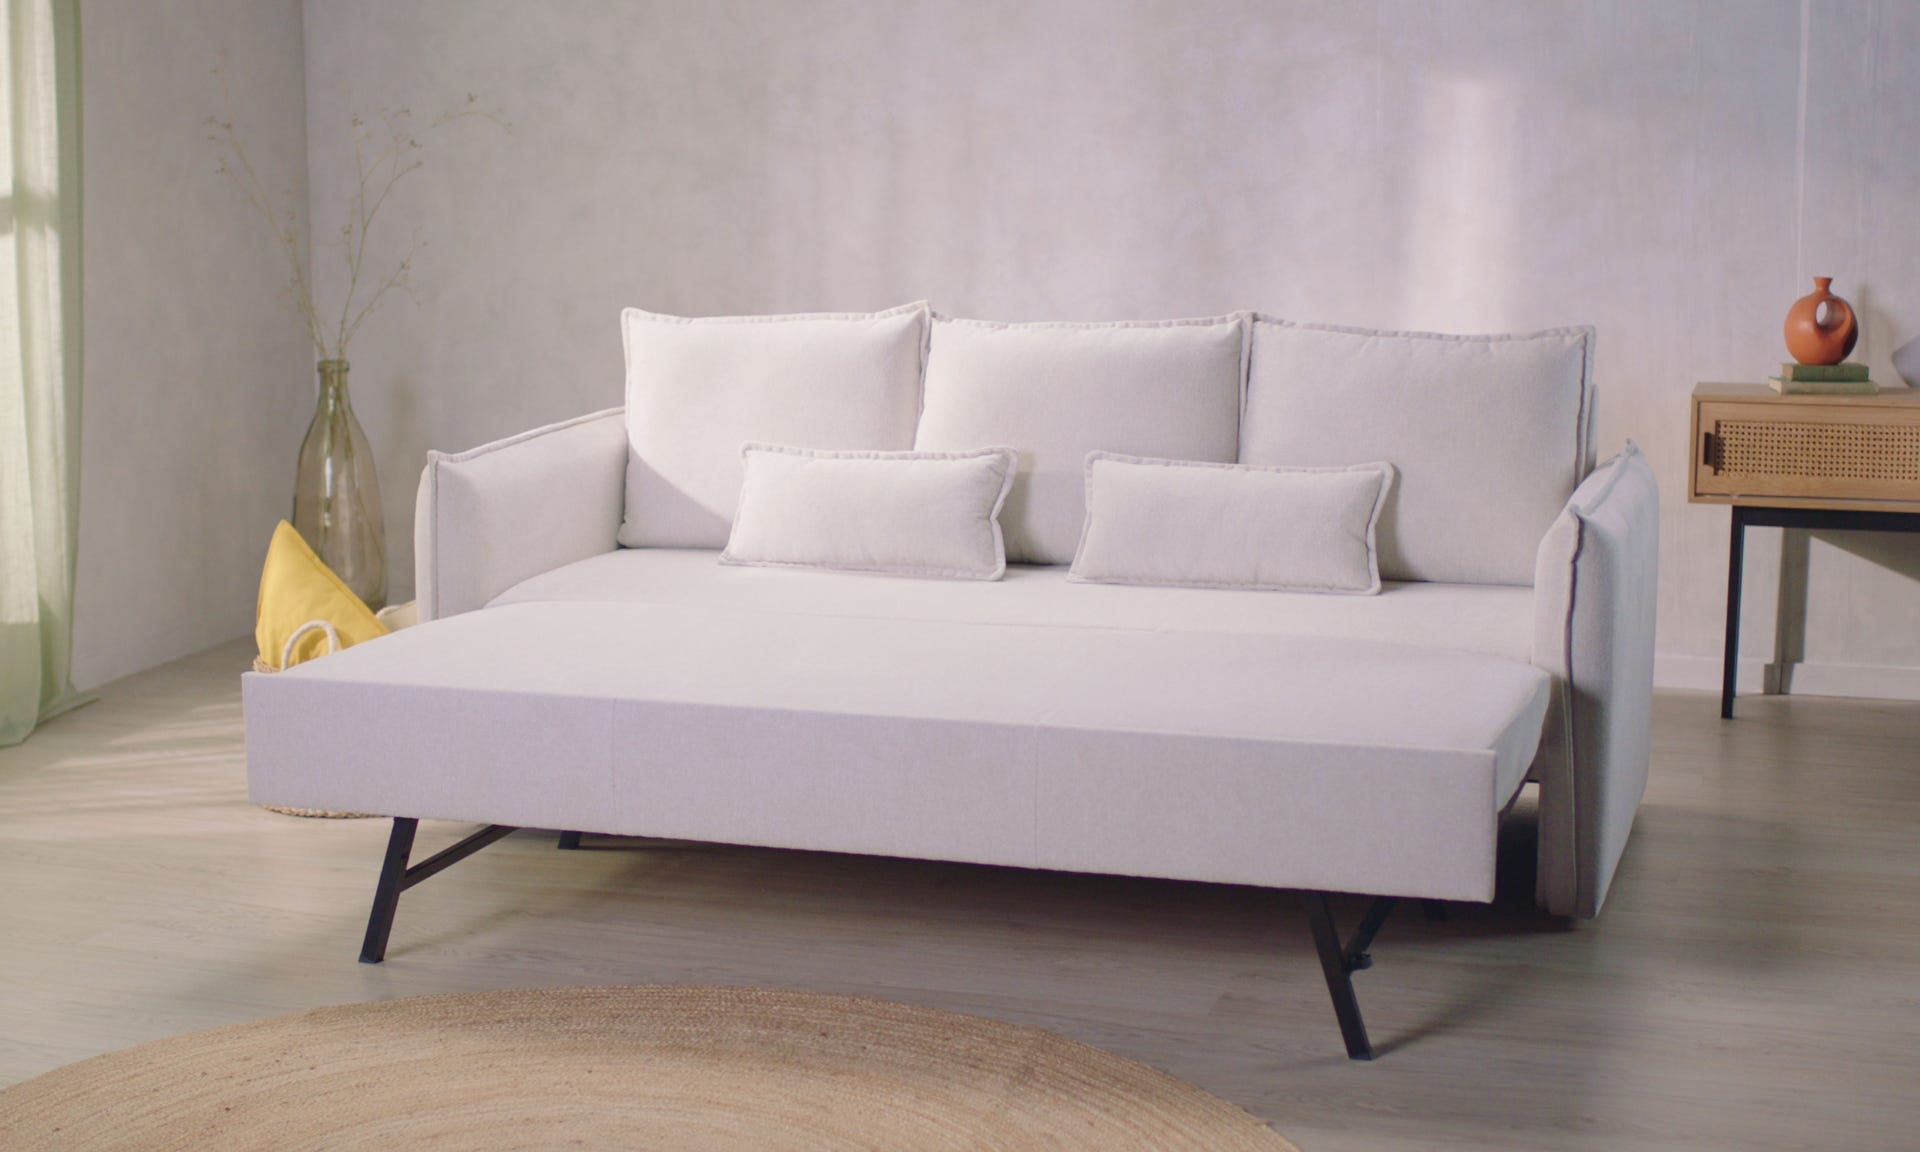 Sofa cama beige convertible chaise longue